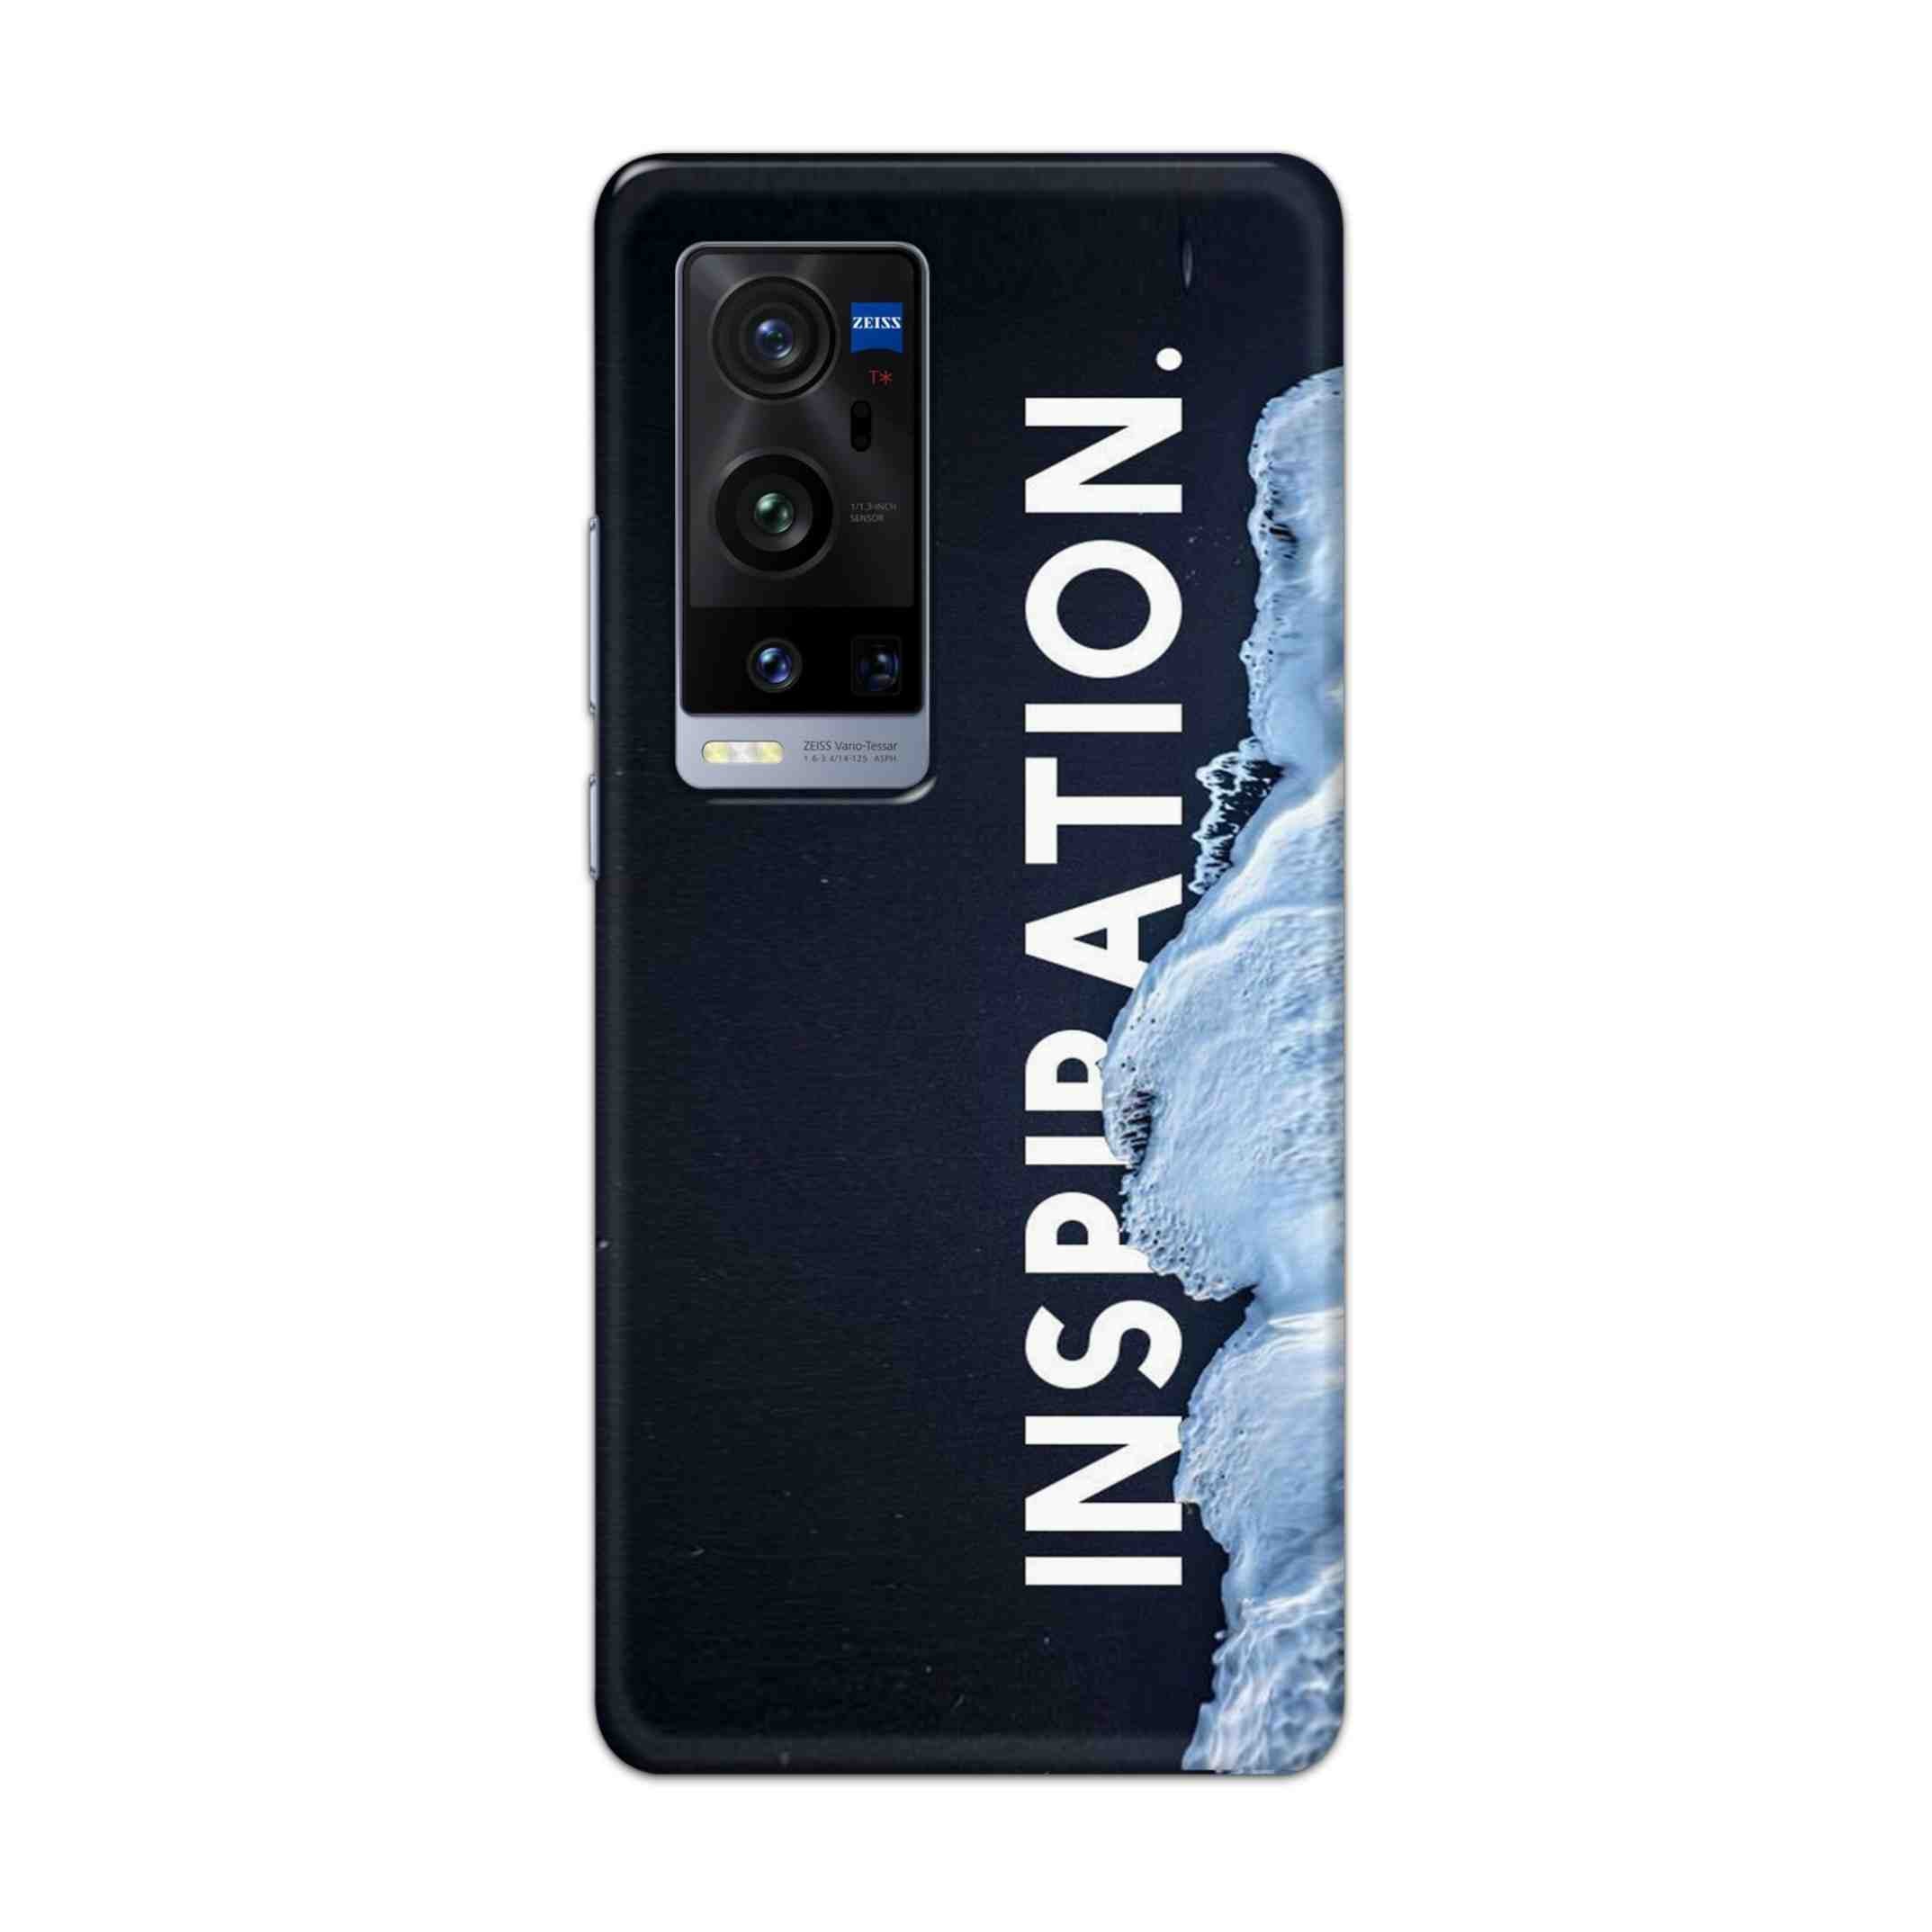 Buy Inspiration Hard Back Mobile Phone Case Cover For Vivo X60 Pro Plus Online